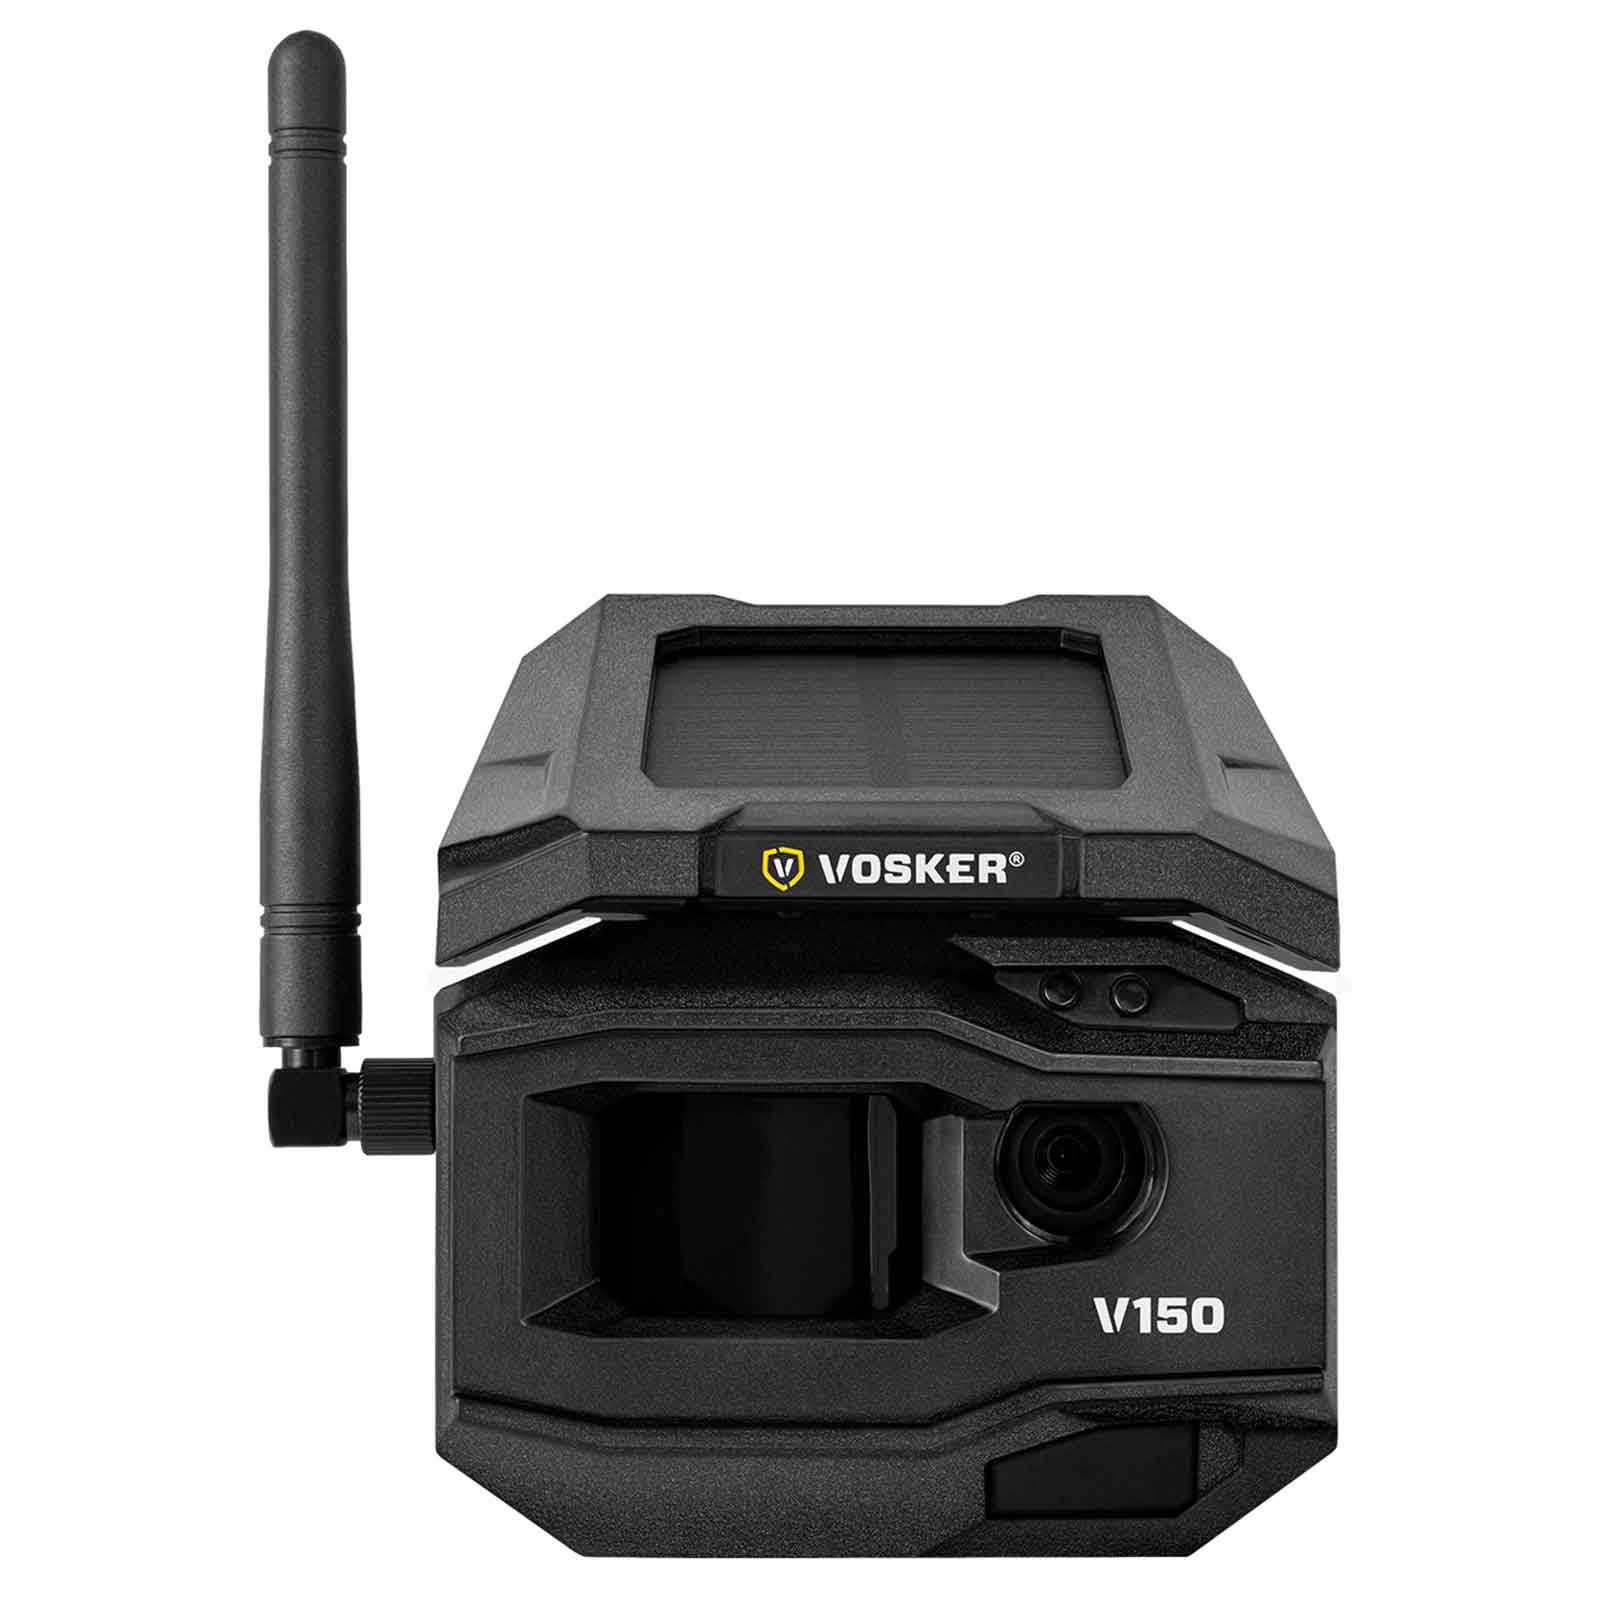 Vosker V150 biztonsági kamera